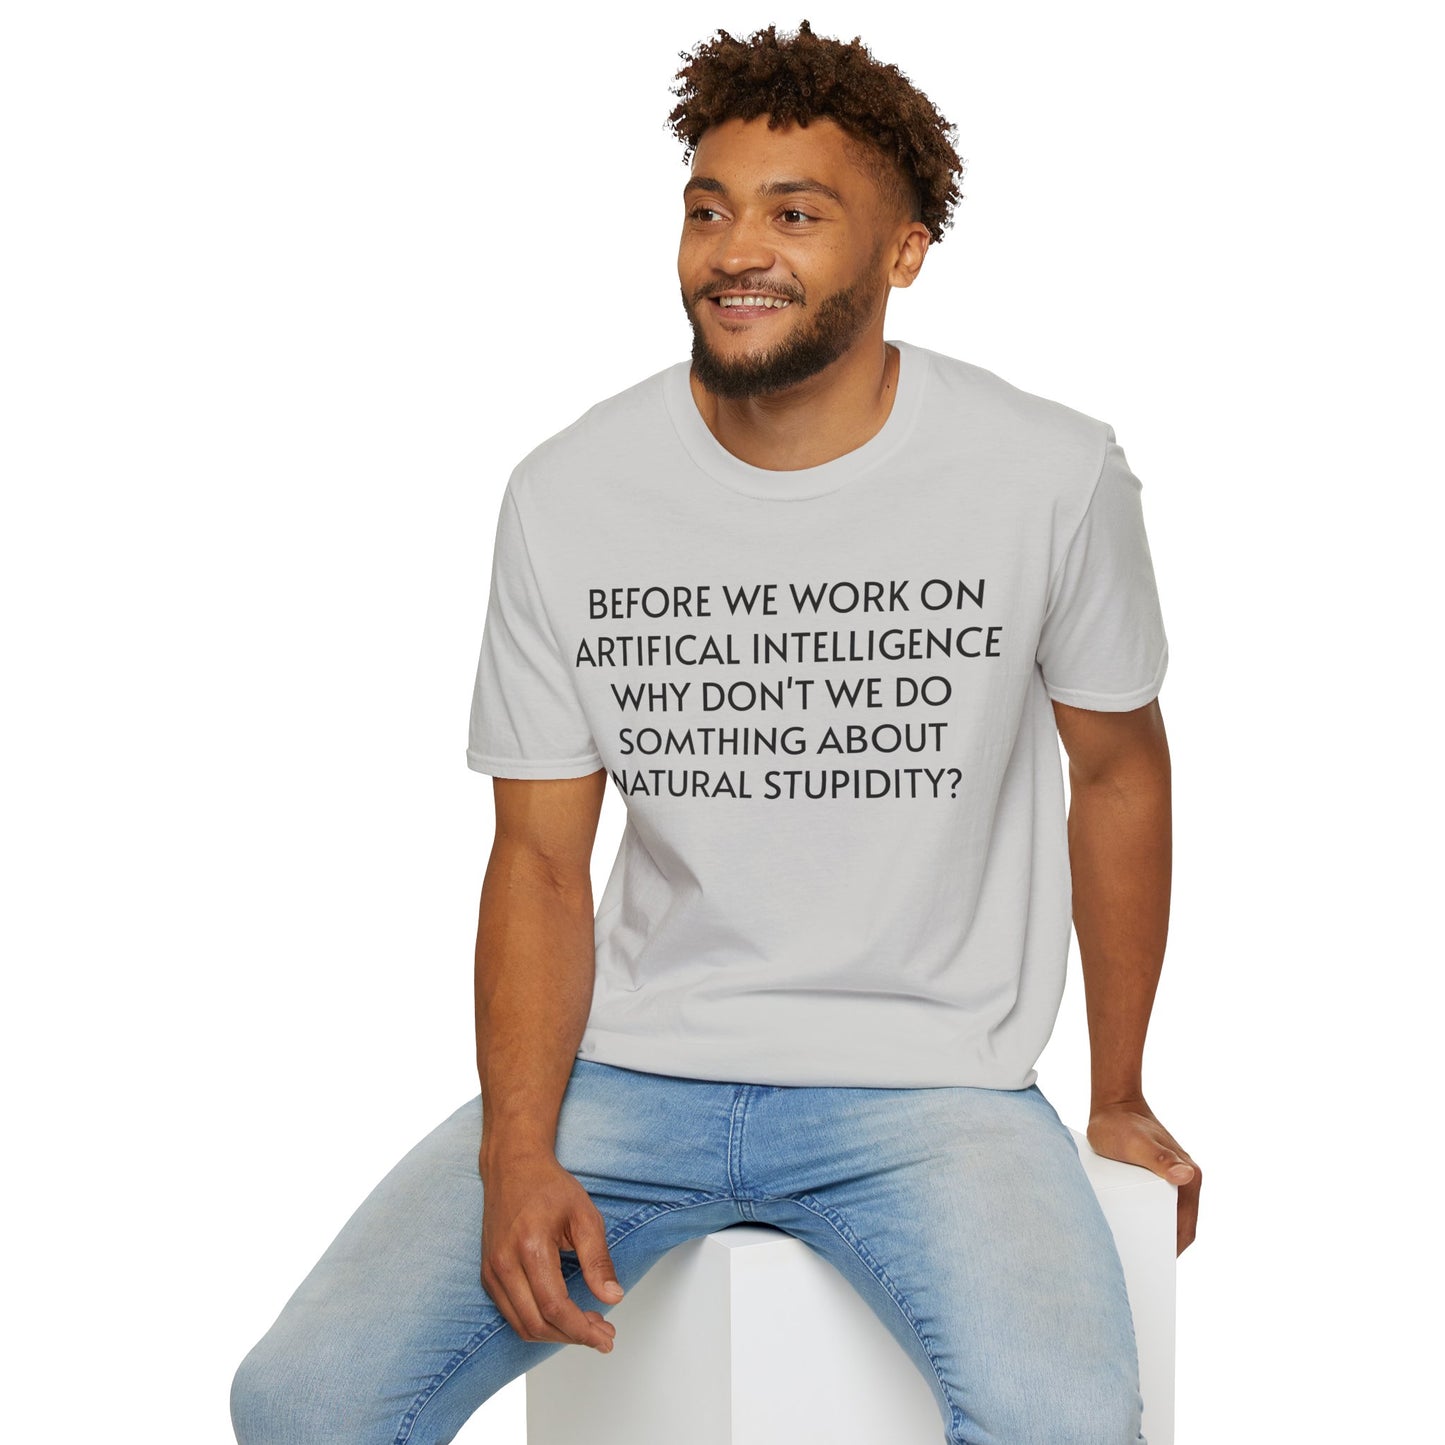 Funny Natural Stupidity T-Shirt Gift